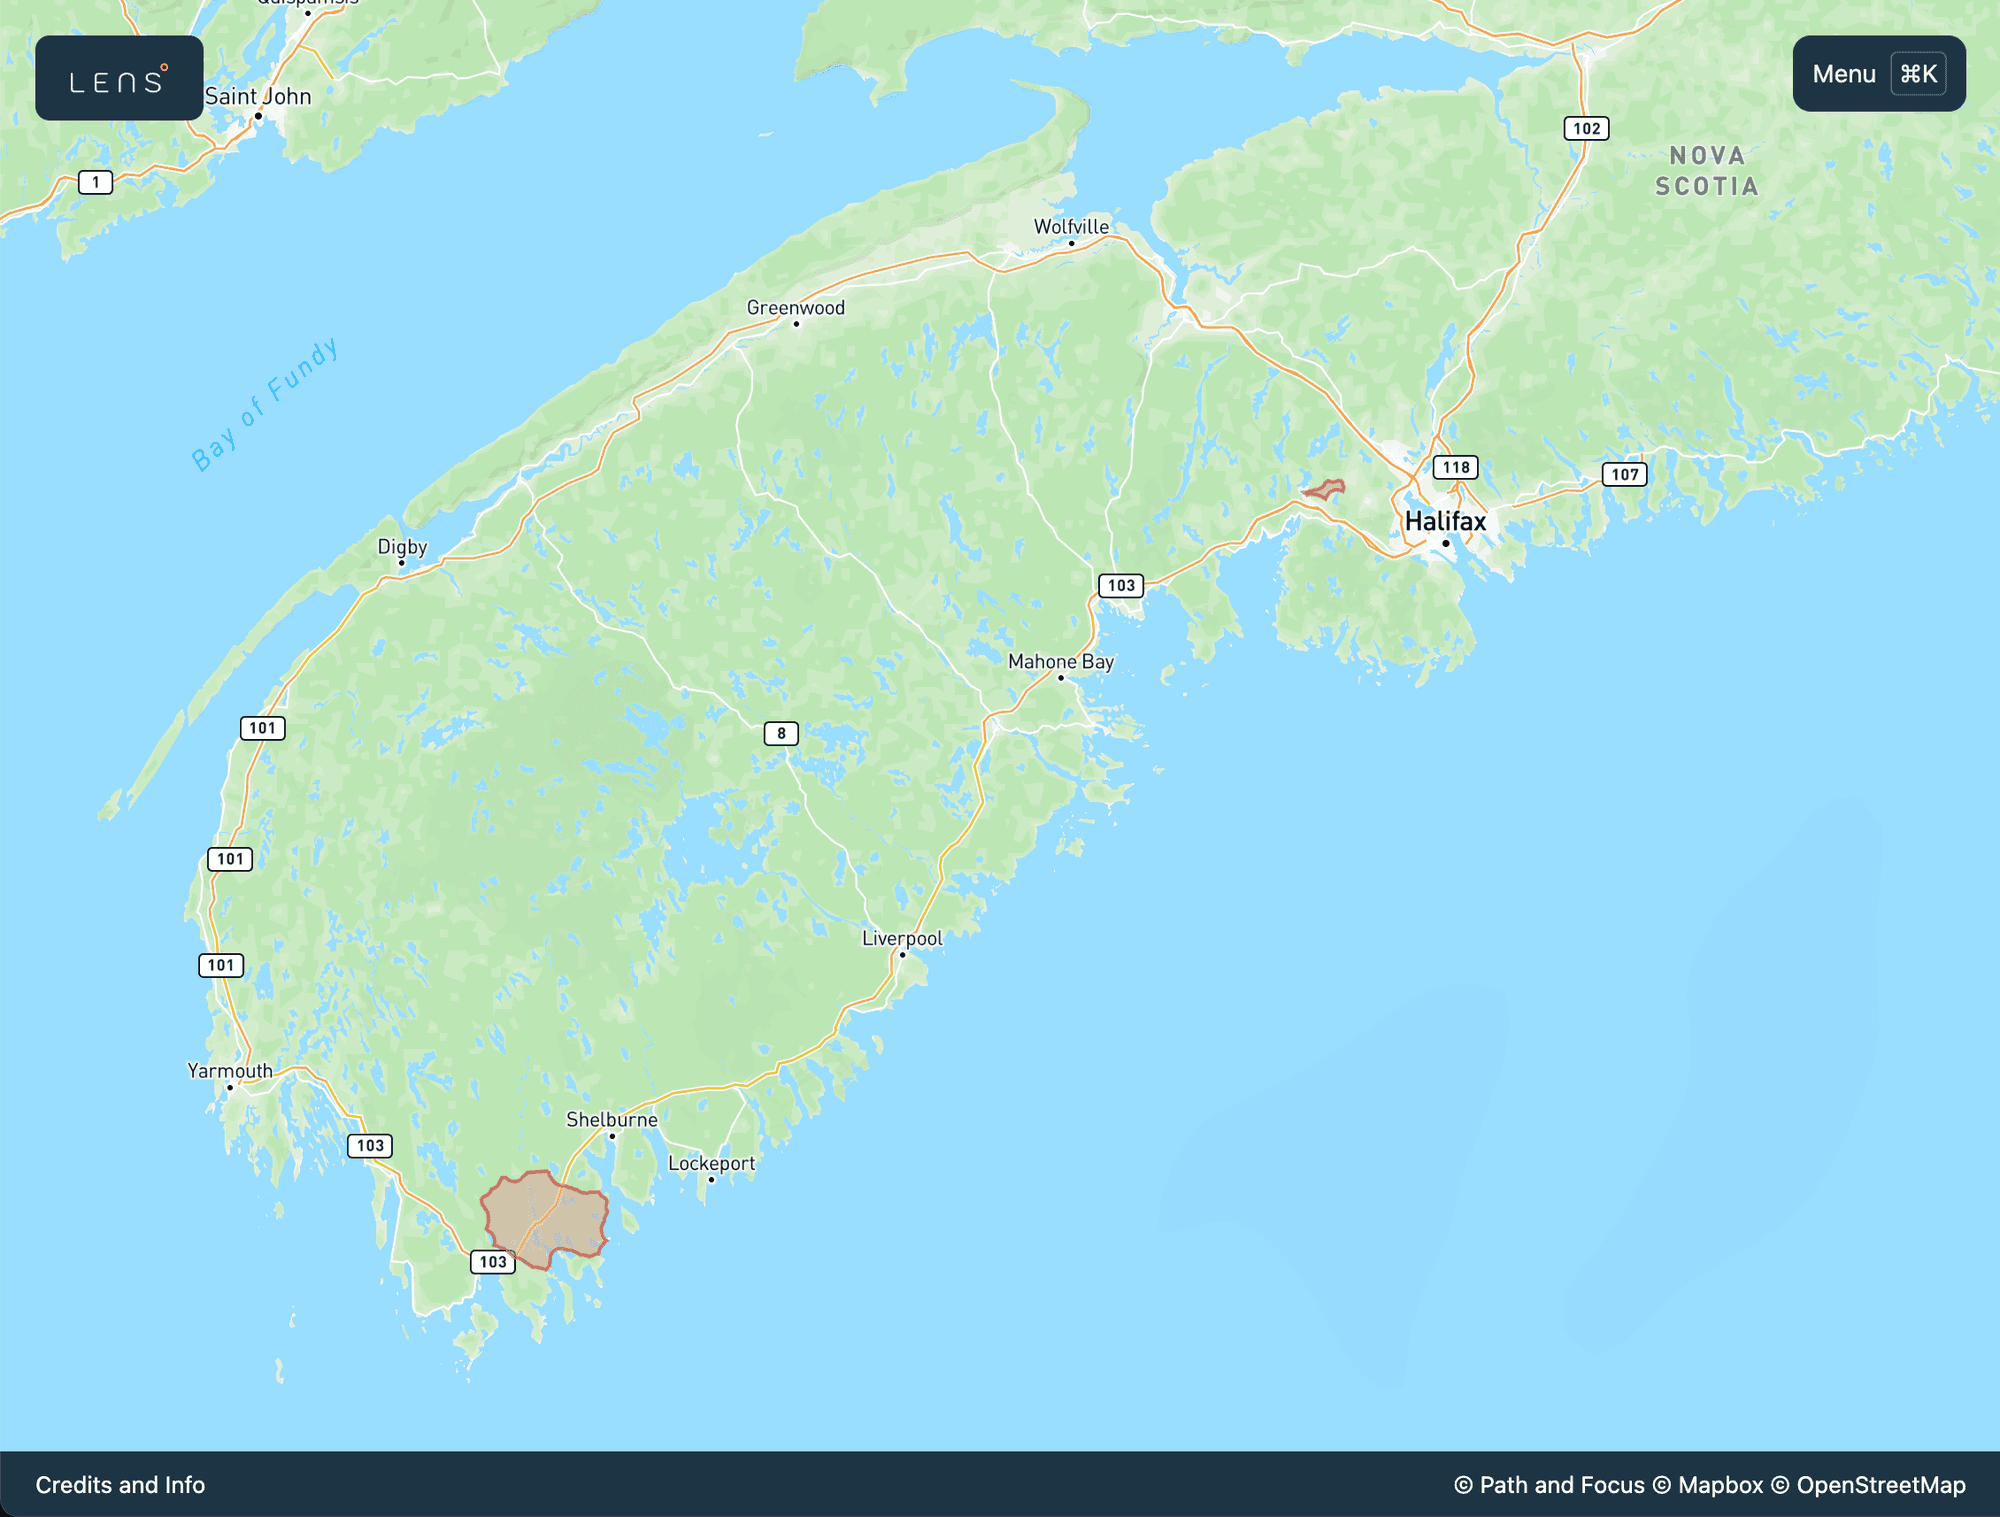 Nova Scotia fire season